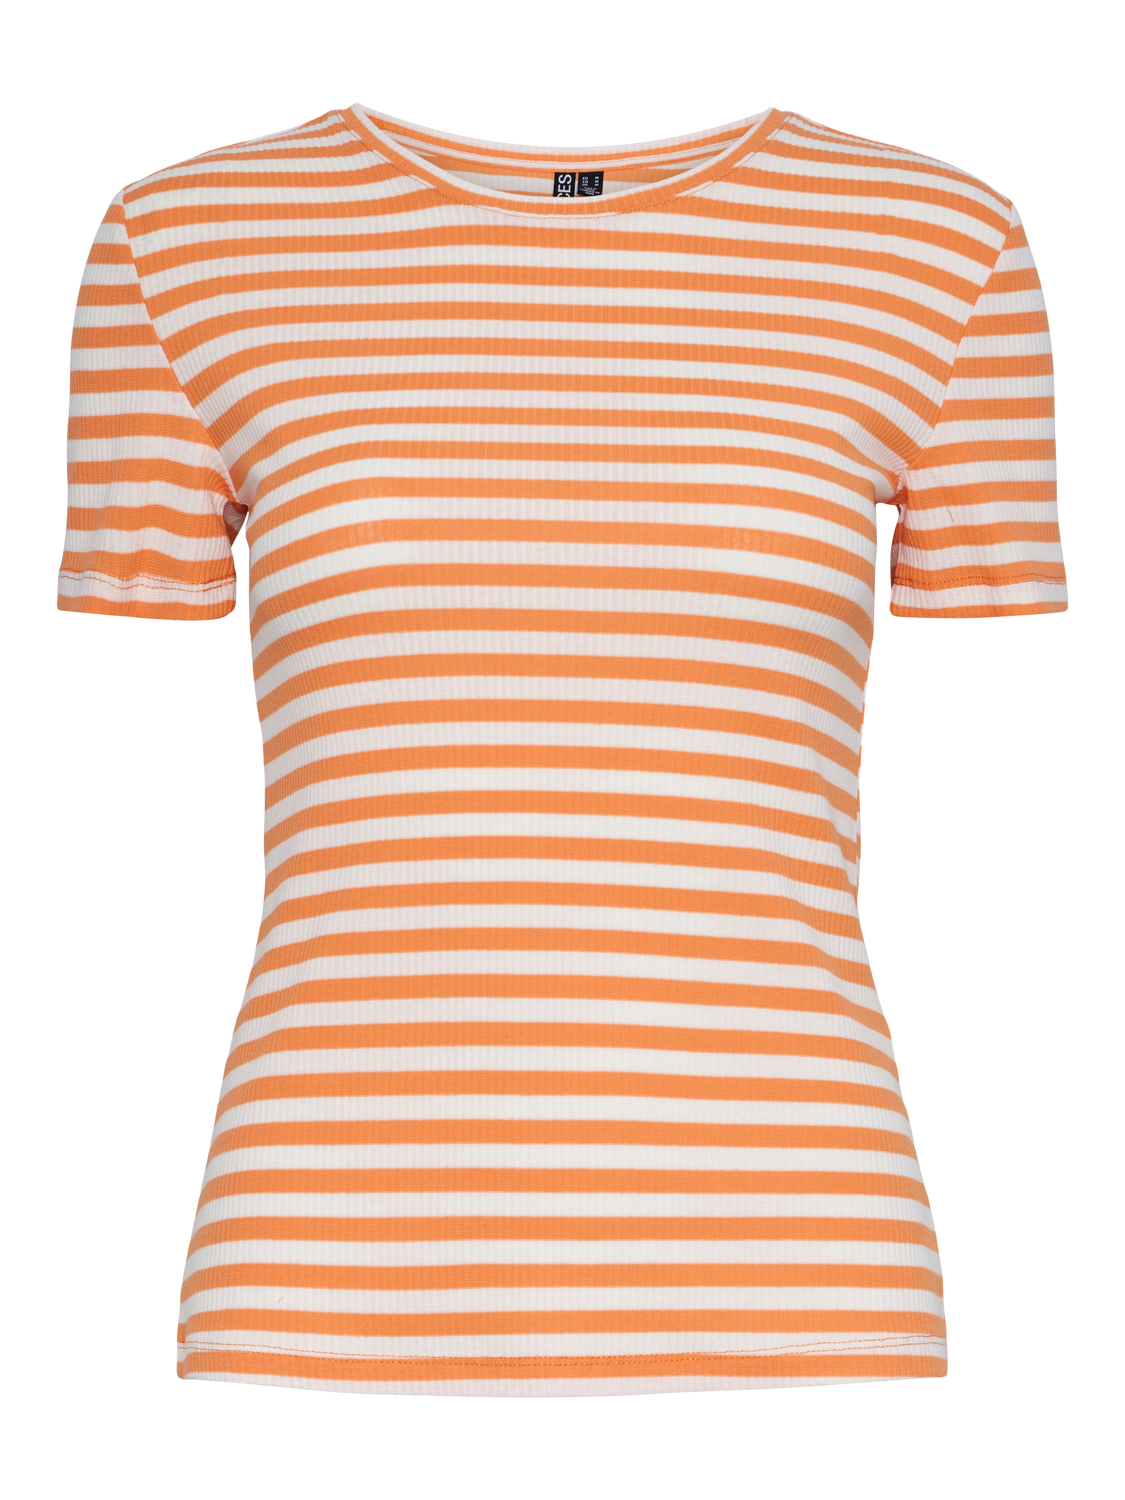 PCRUKA t-shirt - Tangerine